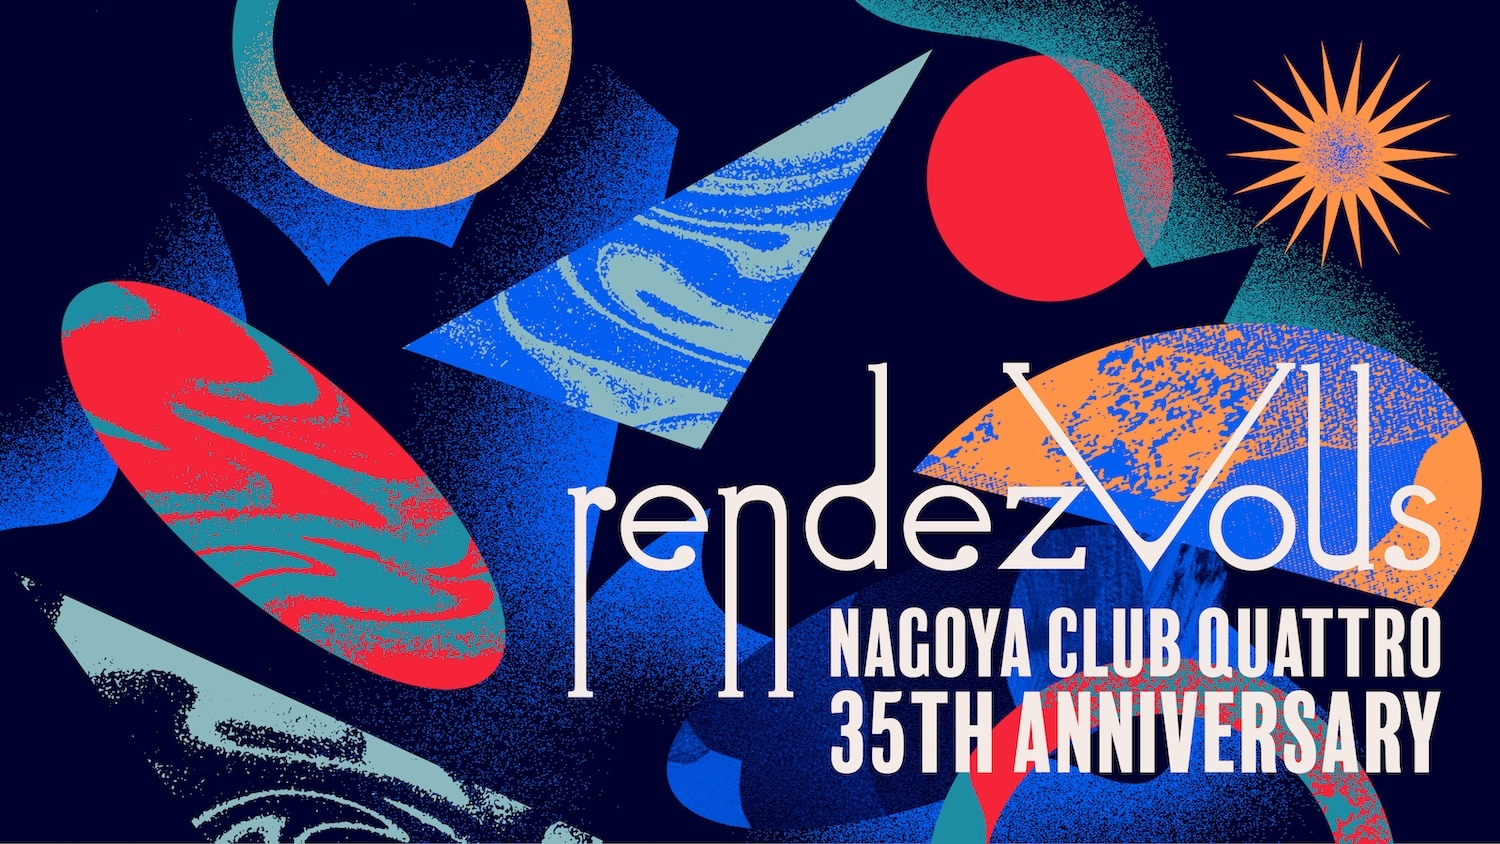 『NAGOYA CLUB QUATTRO 35th Anniversary "rendezvous(ランデブー)"』